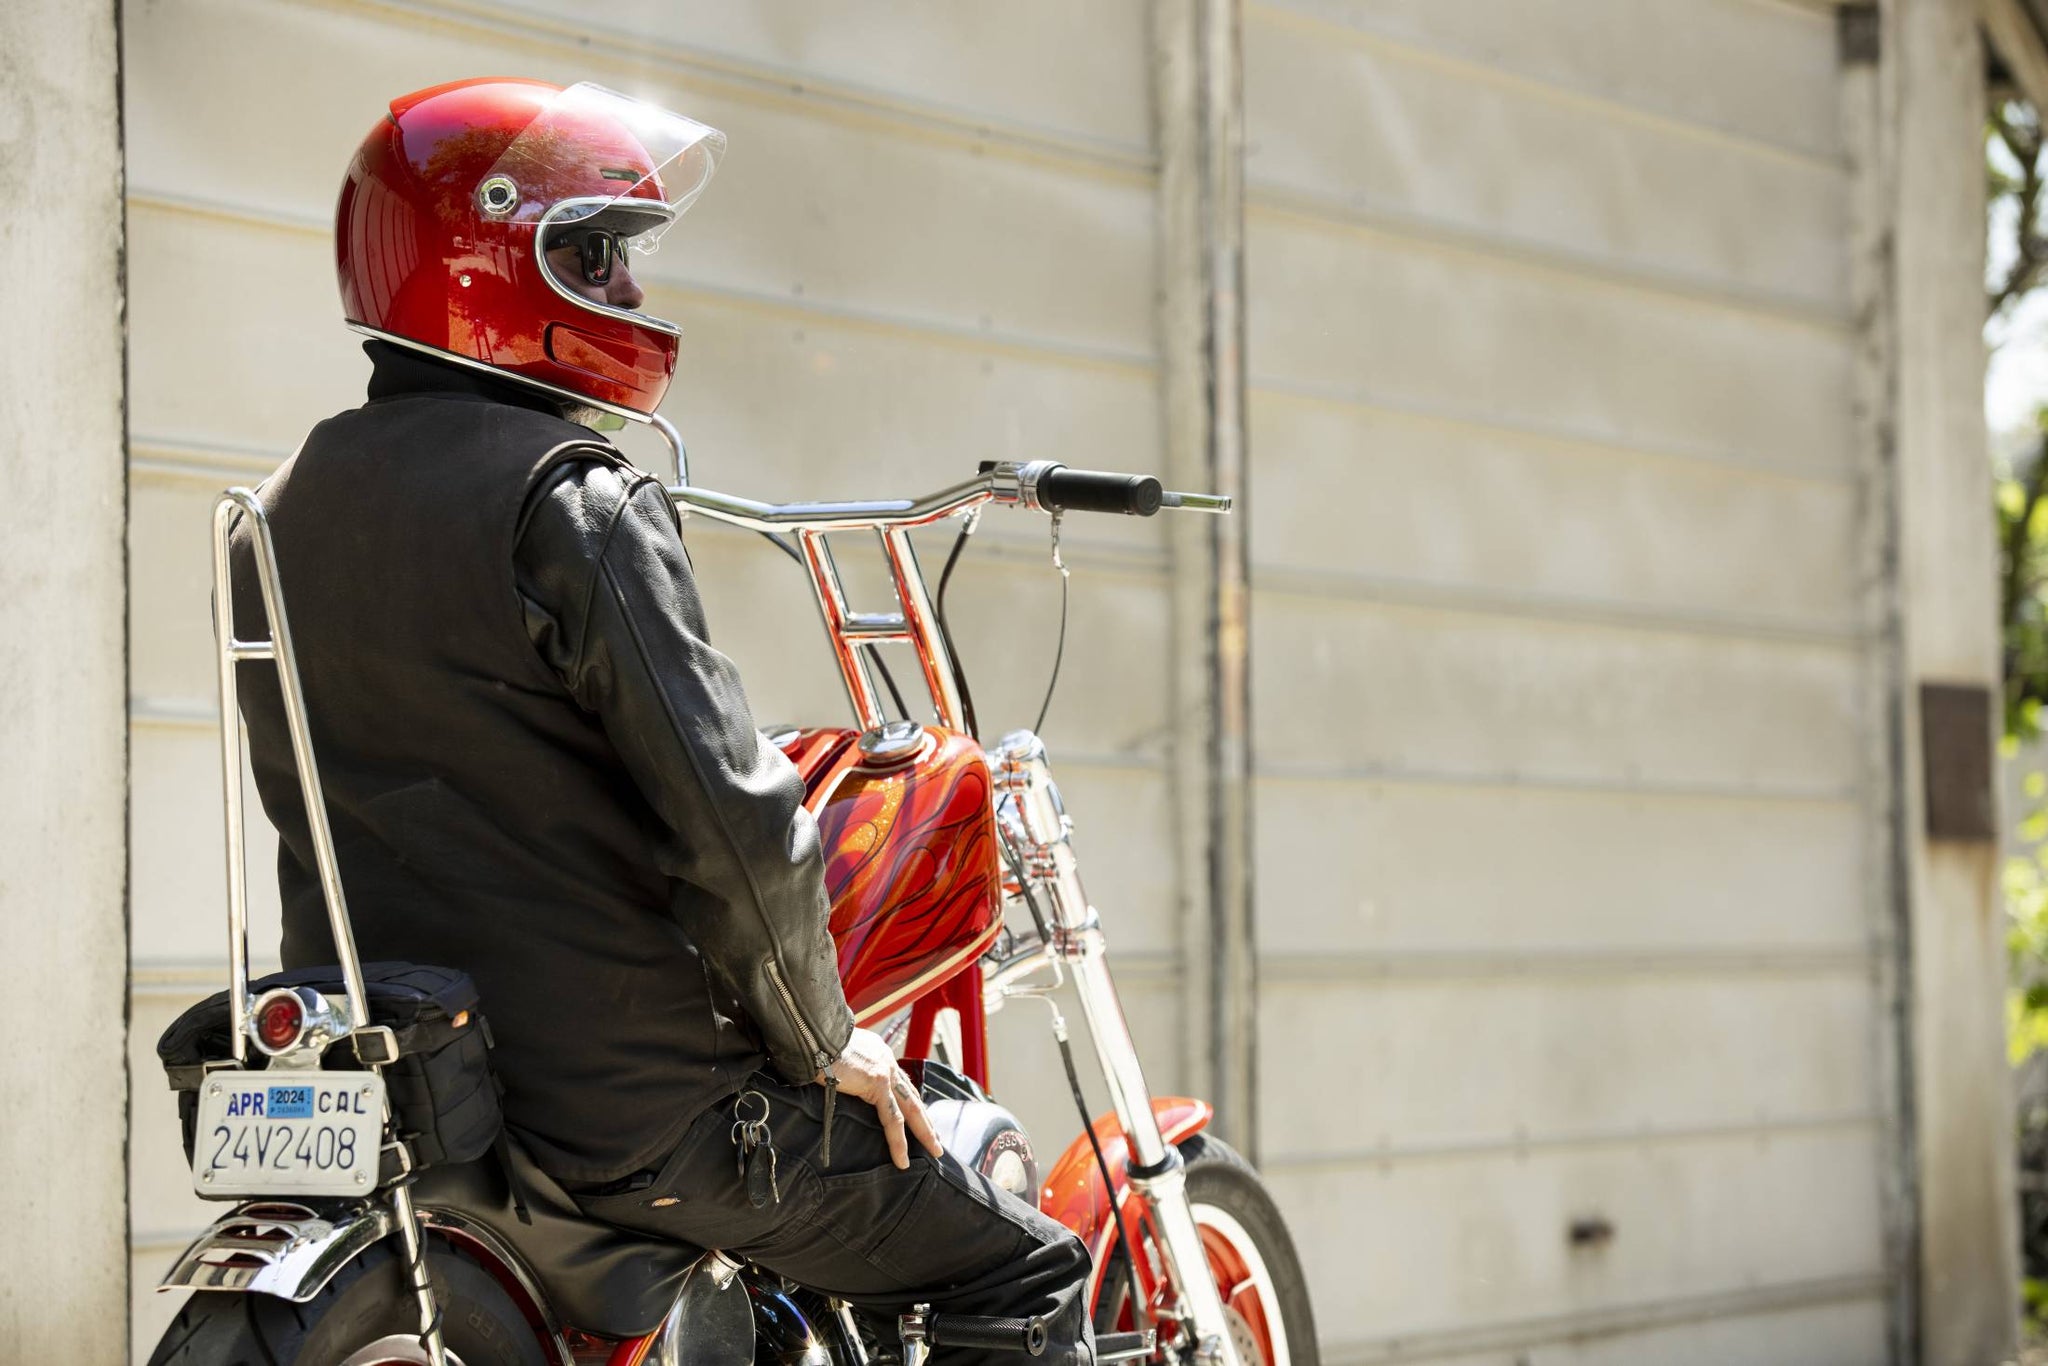 Gringo SV Metallic Candy Red on Rider